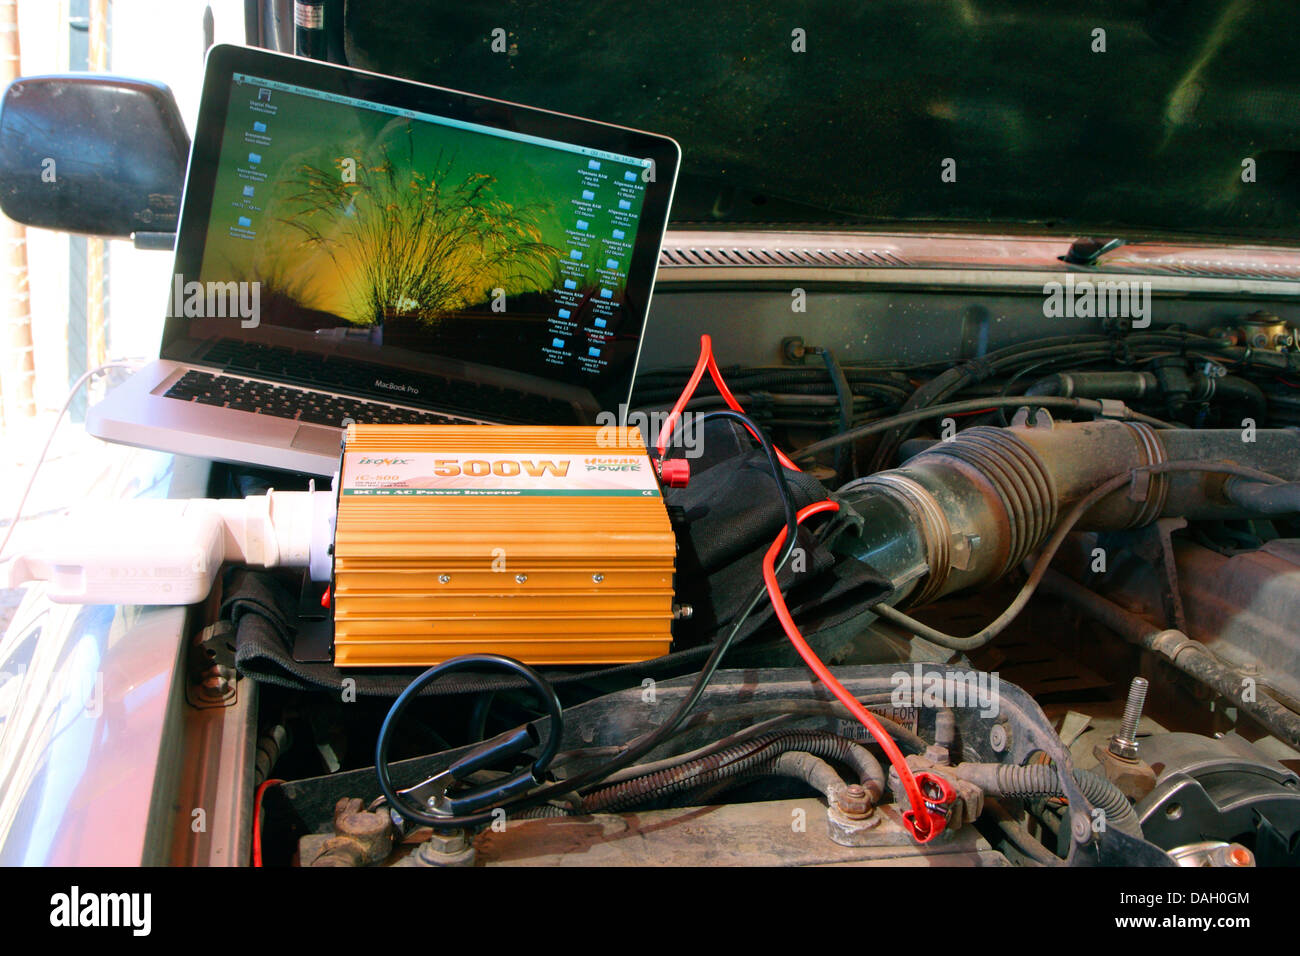 charging a laptop at a car battery in the Kalahari desert, South Africa Stock Photo